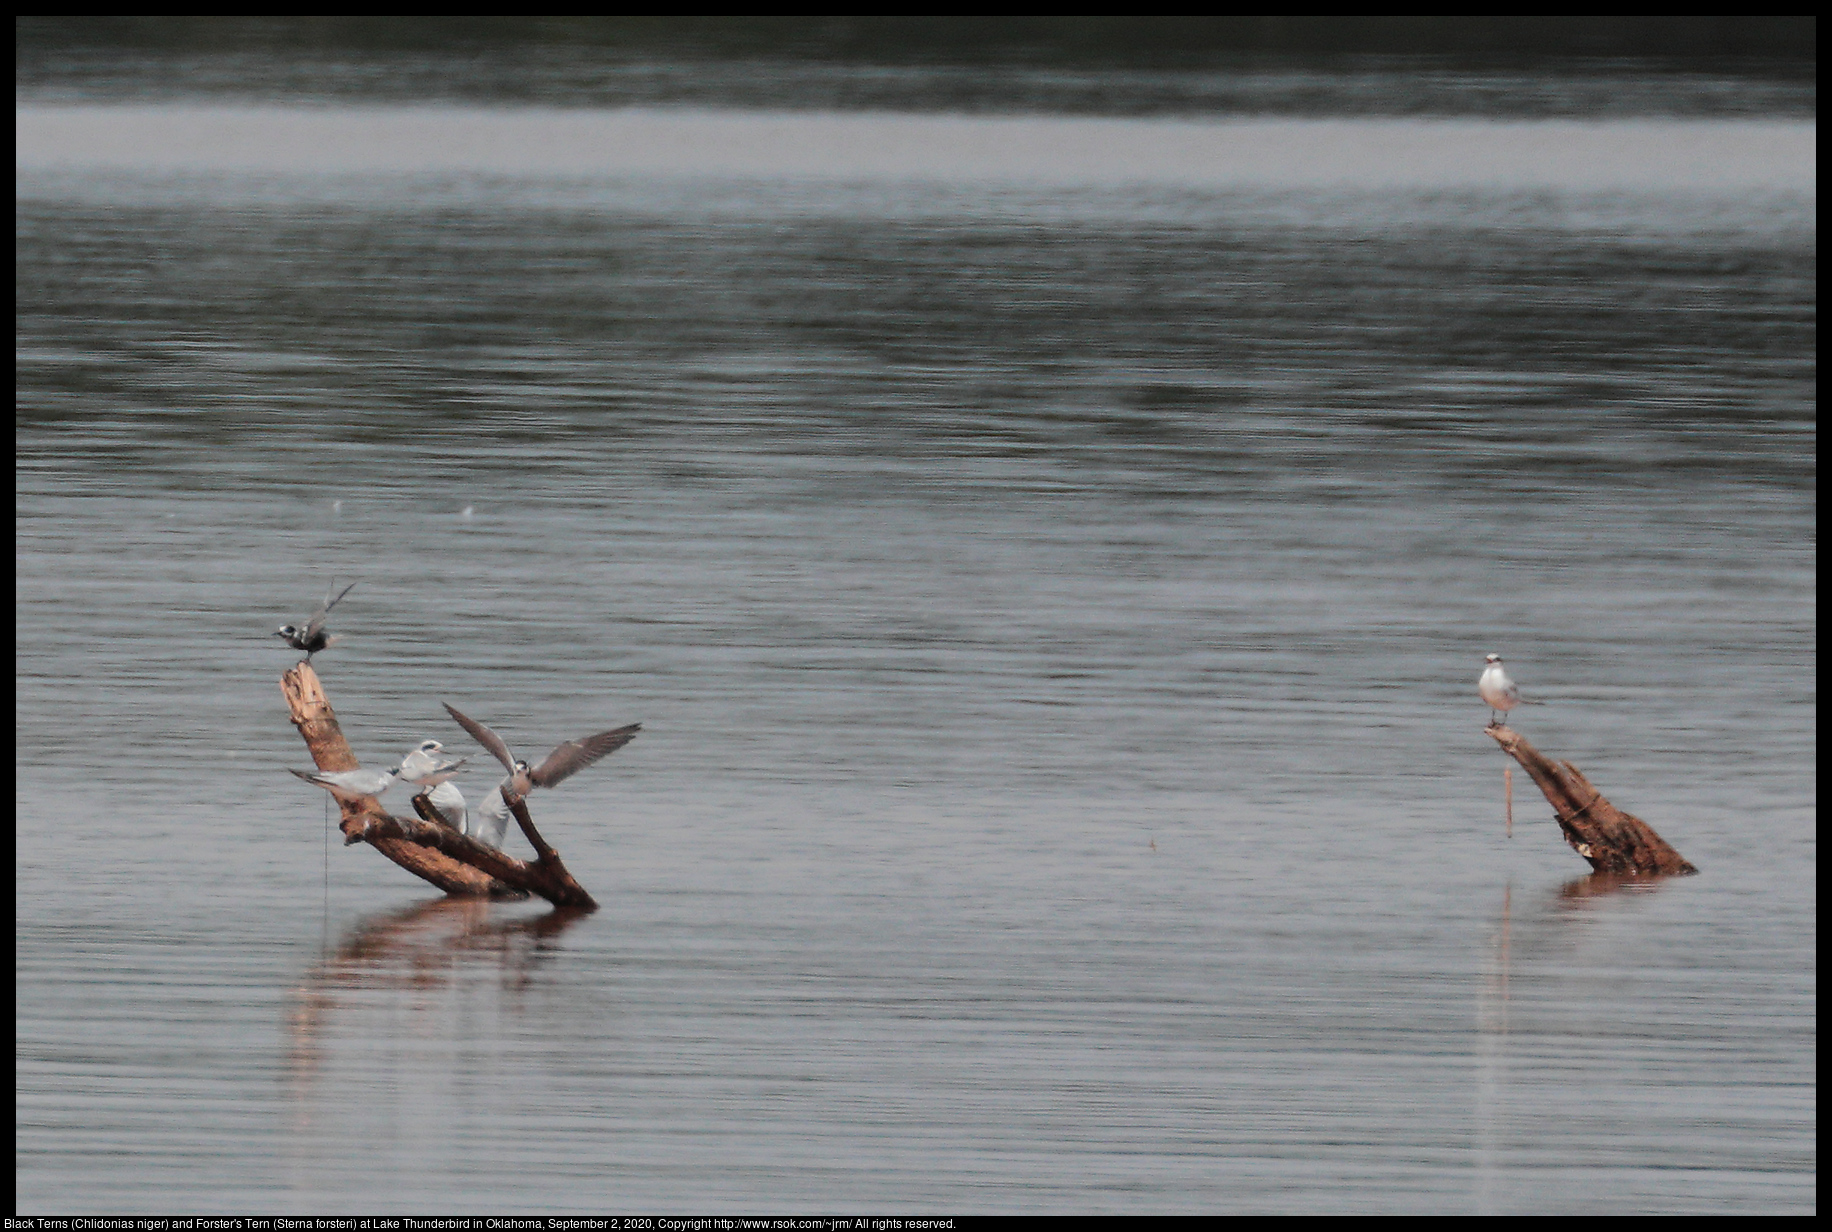 Black Terns (Chlidonias niger) and Forster's Tern (Sterna forsteri) at Lake Thunderbird in Oklahoma, September 2, 2020